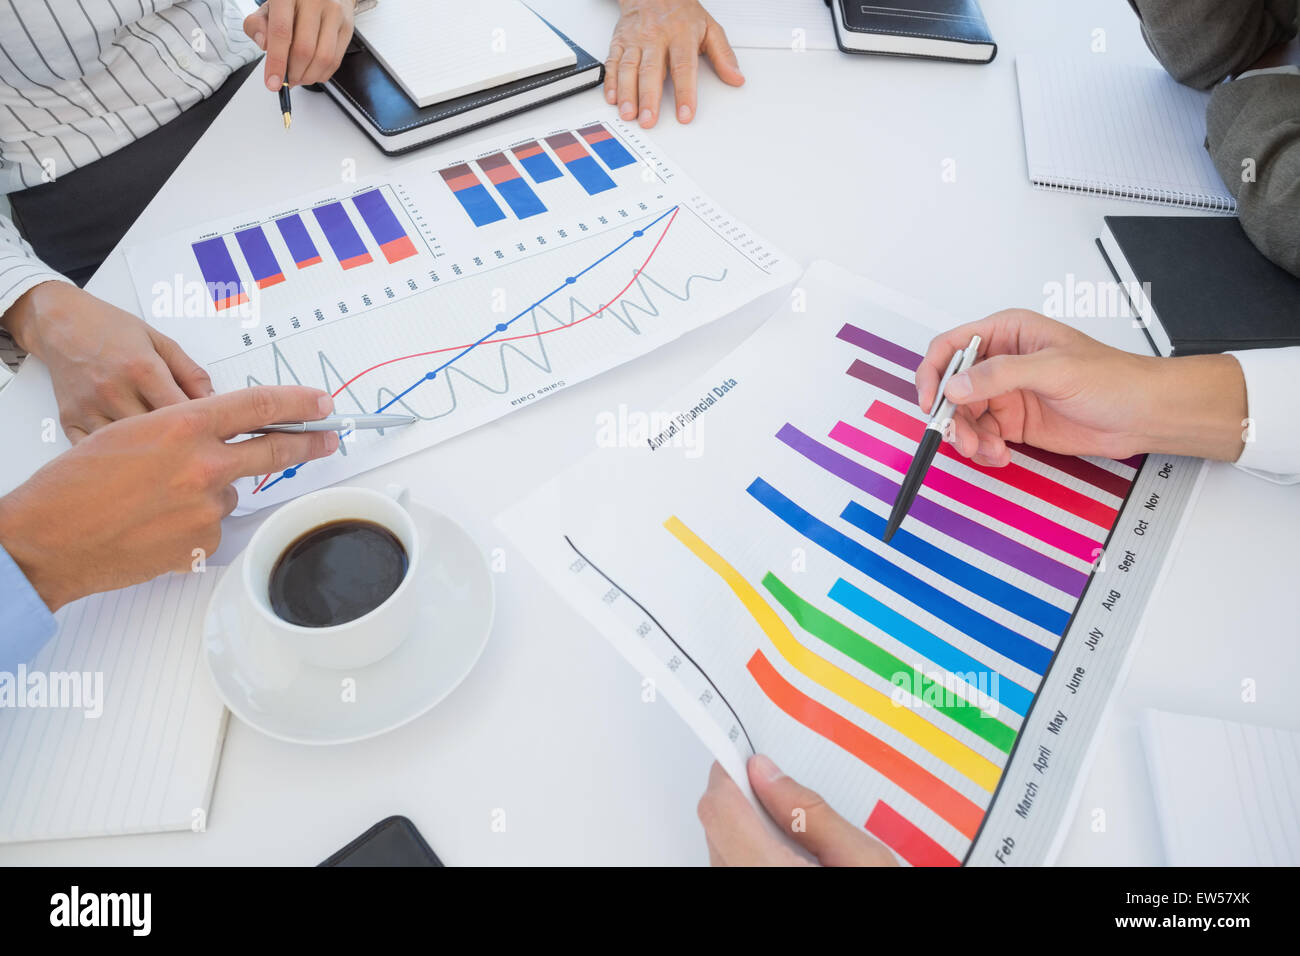 Business team analyzing bar chart graphs Stock Photo